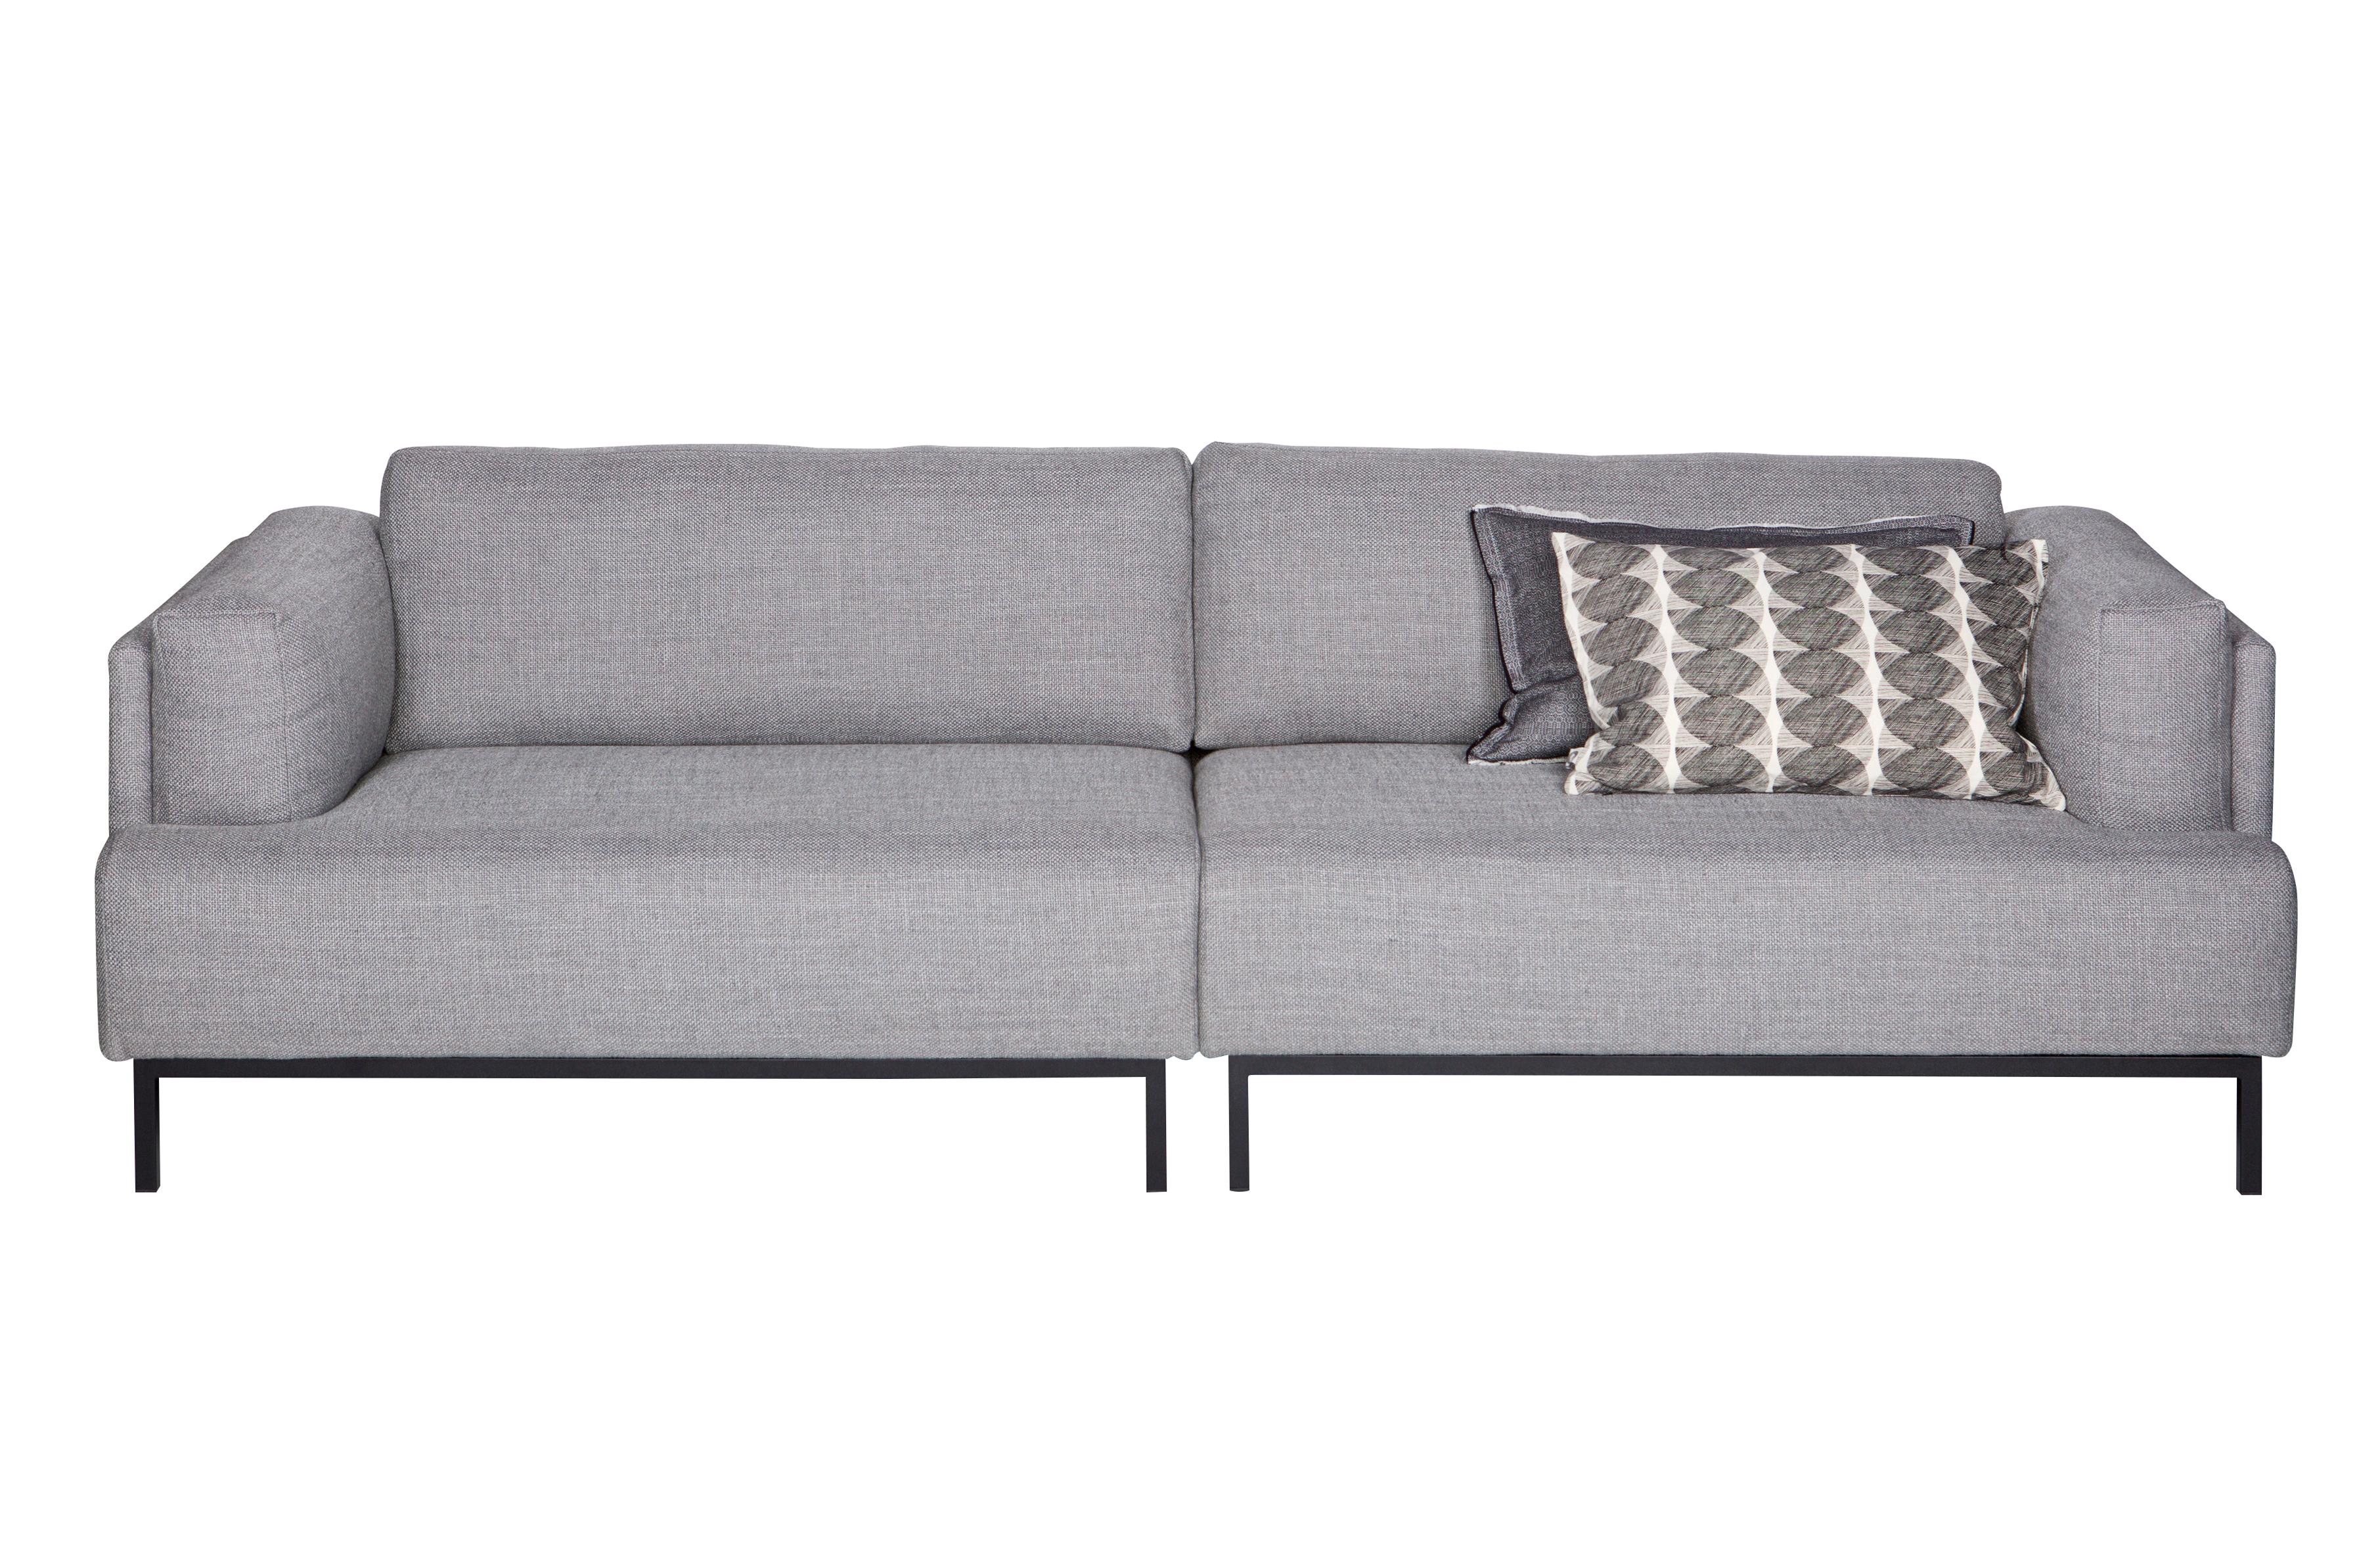 Woood Sofa im skandinavischen Stil #sofa ©Woood